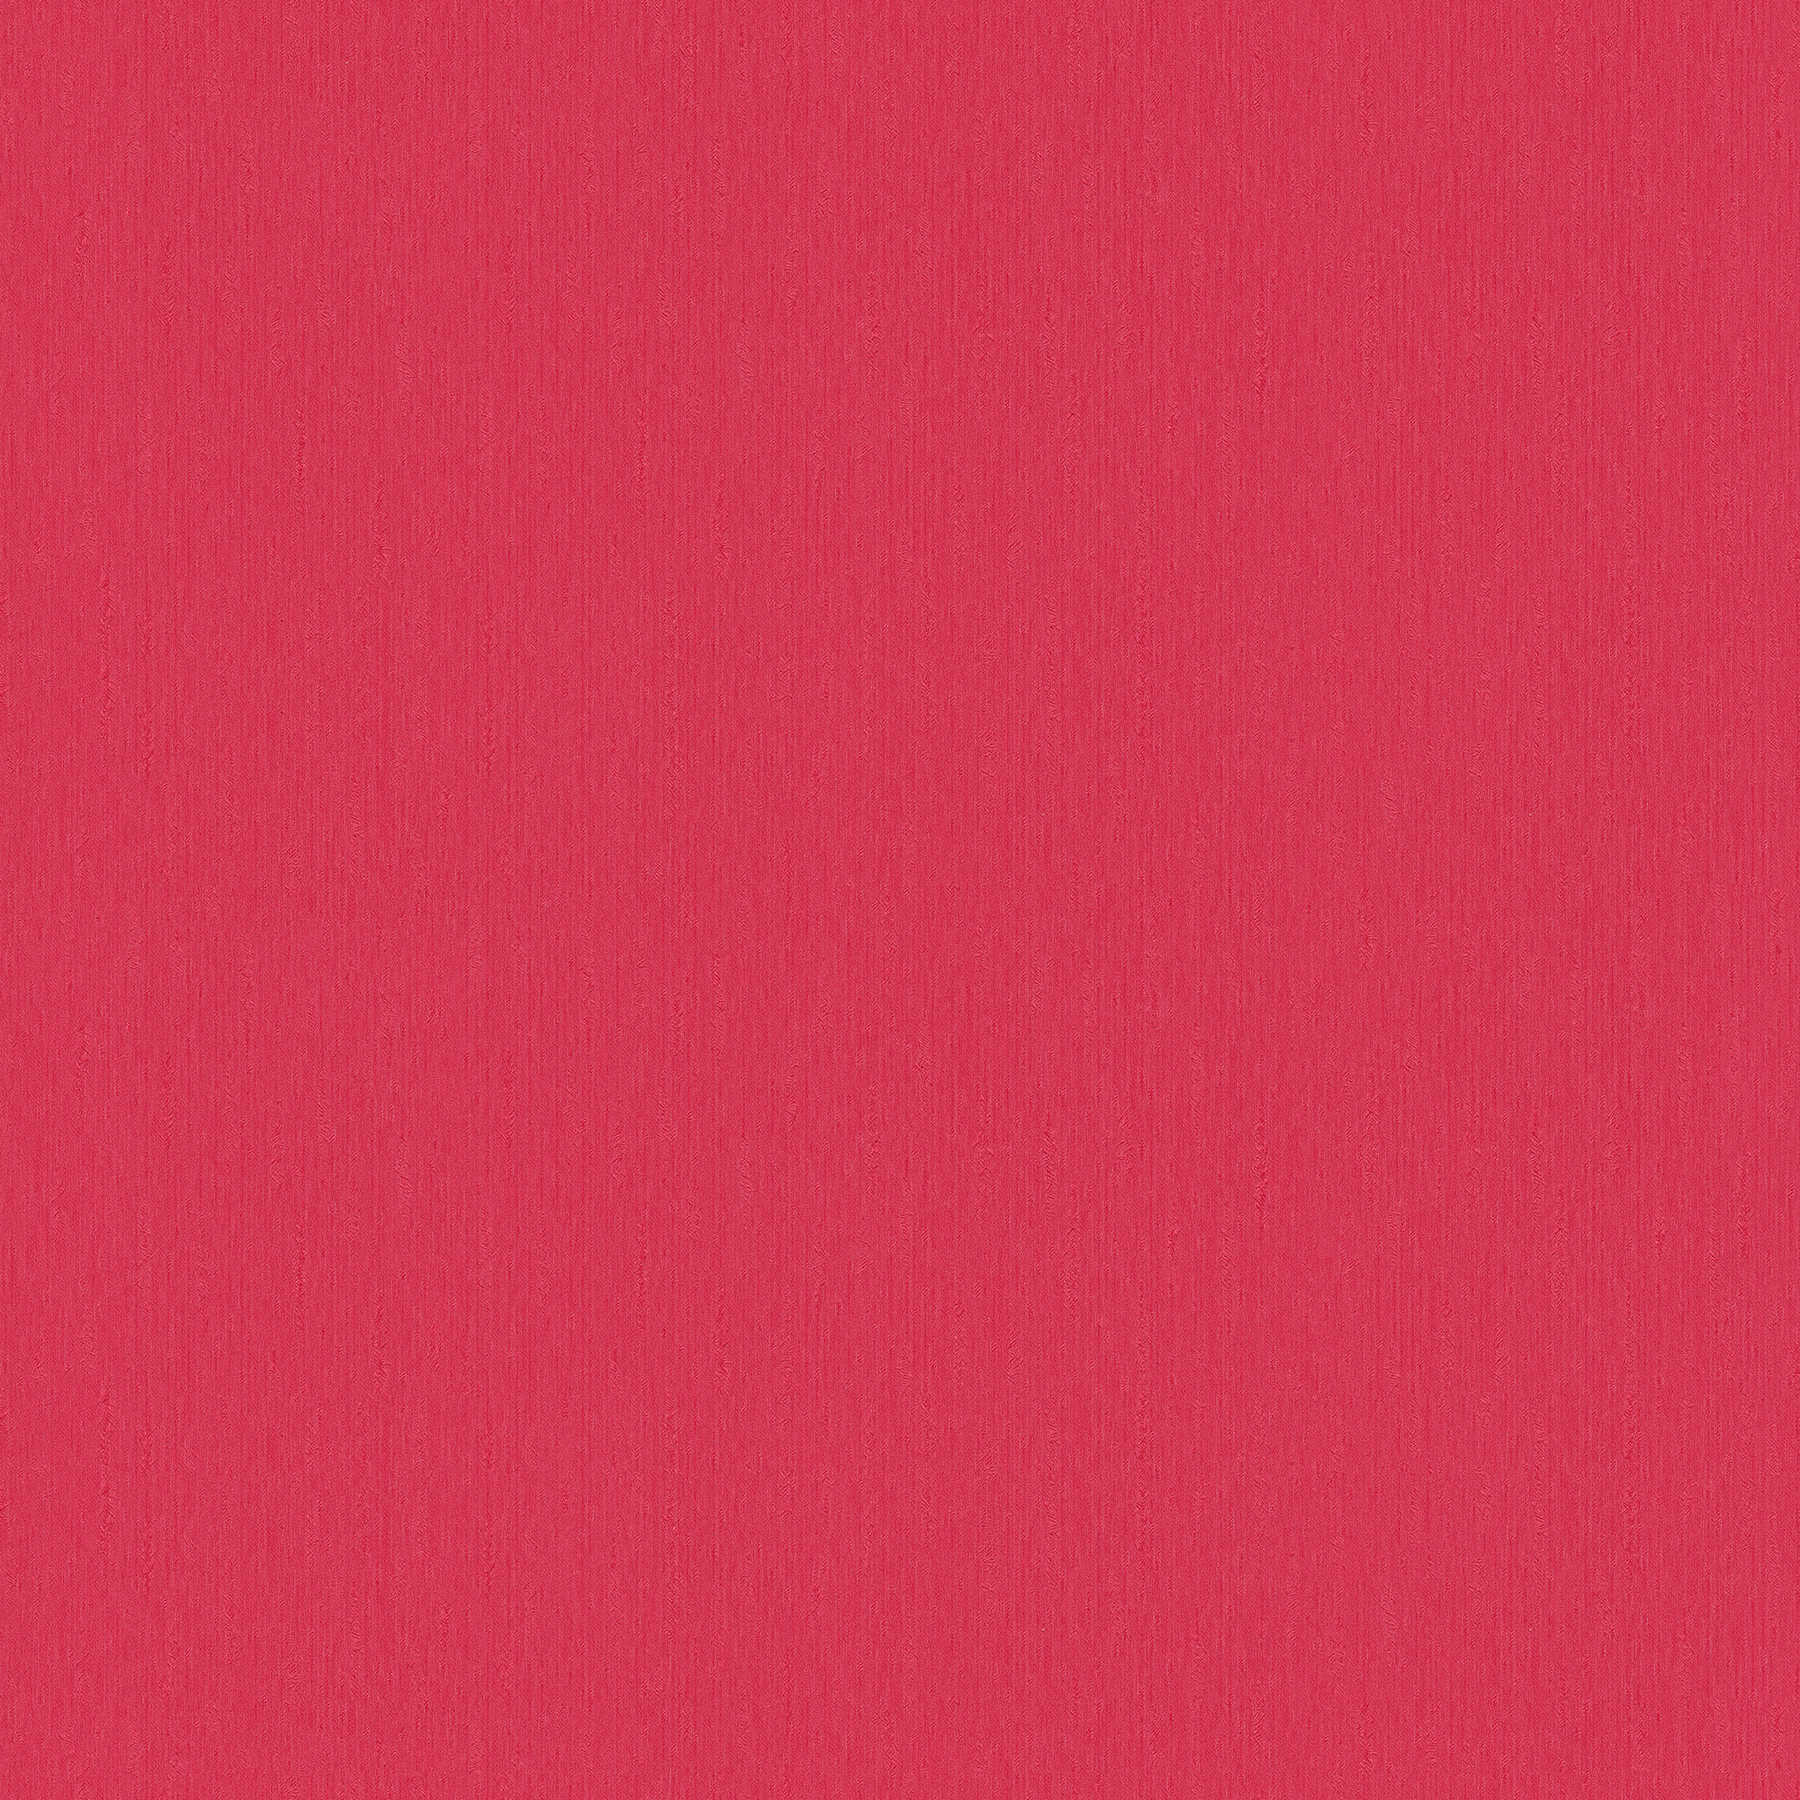 Red non-woven wallpaper intense fuchsia with satin finish
